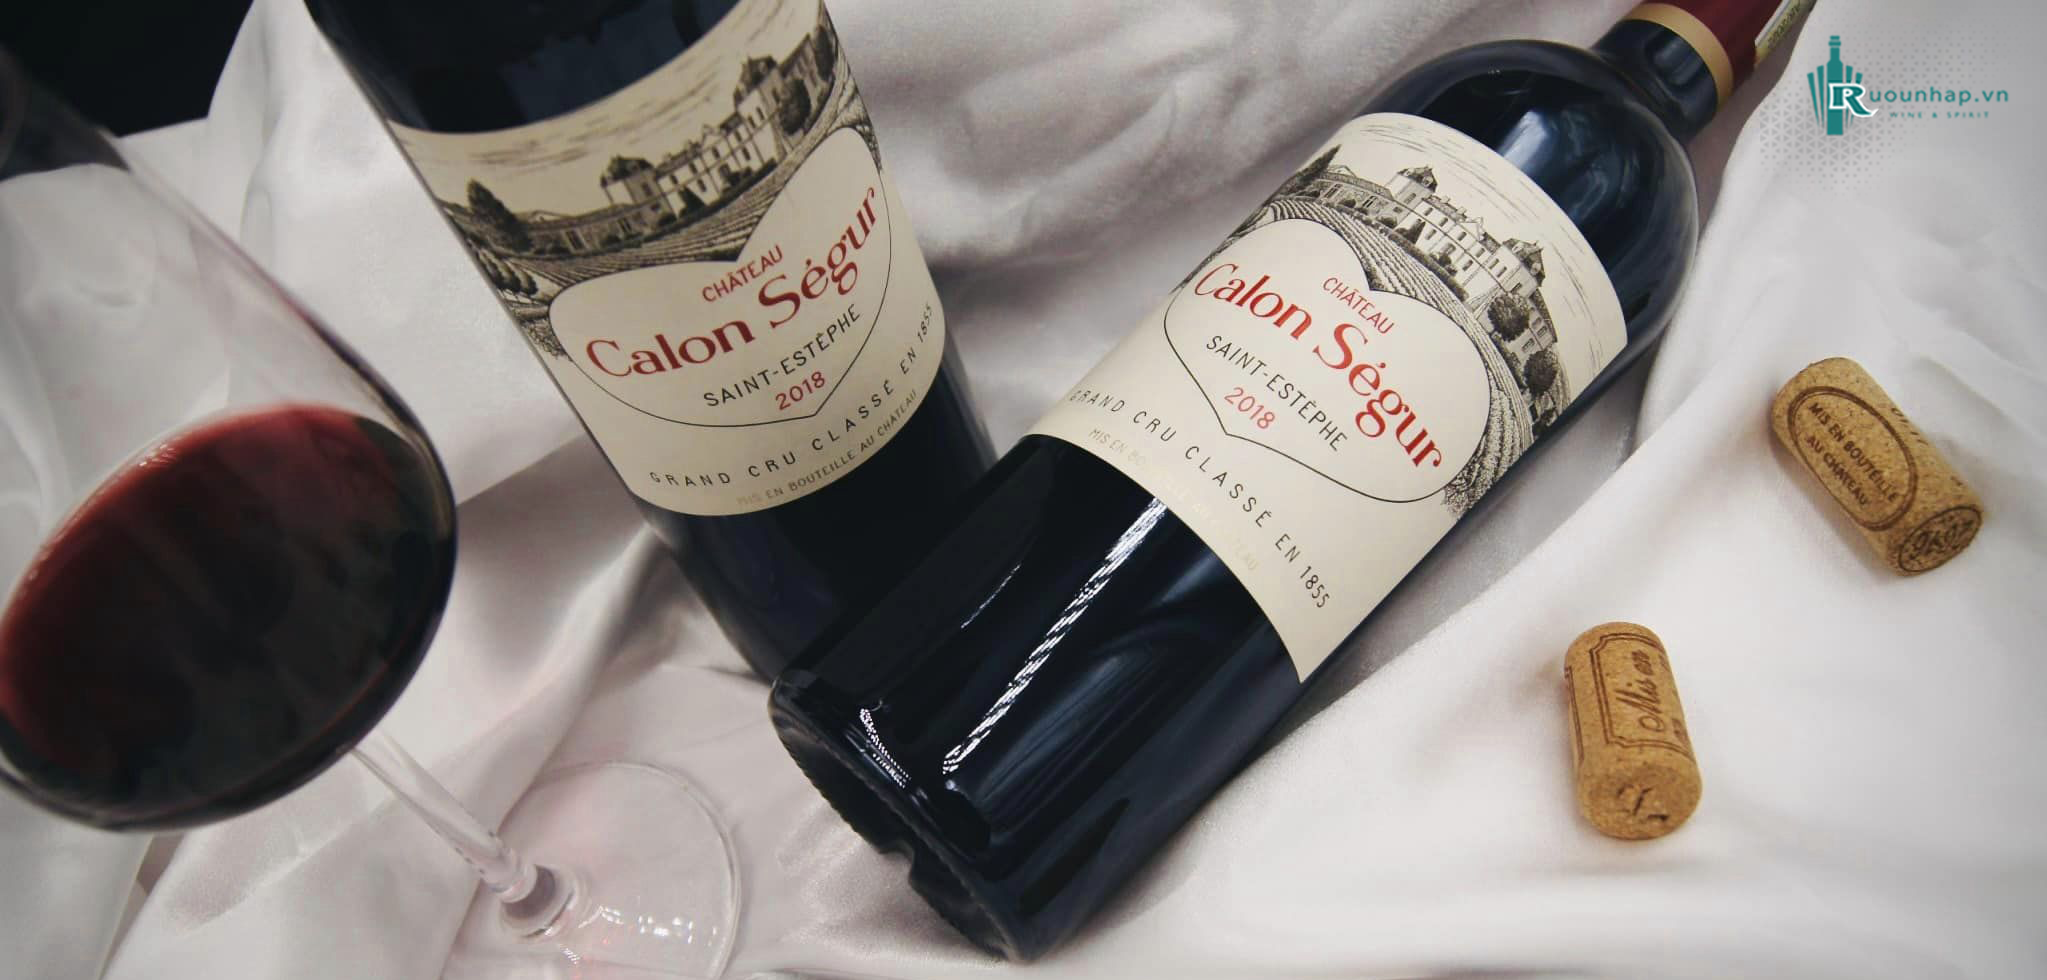 Rượu Vang Chateau Calon Segur Saint-Estephe